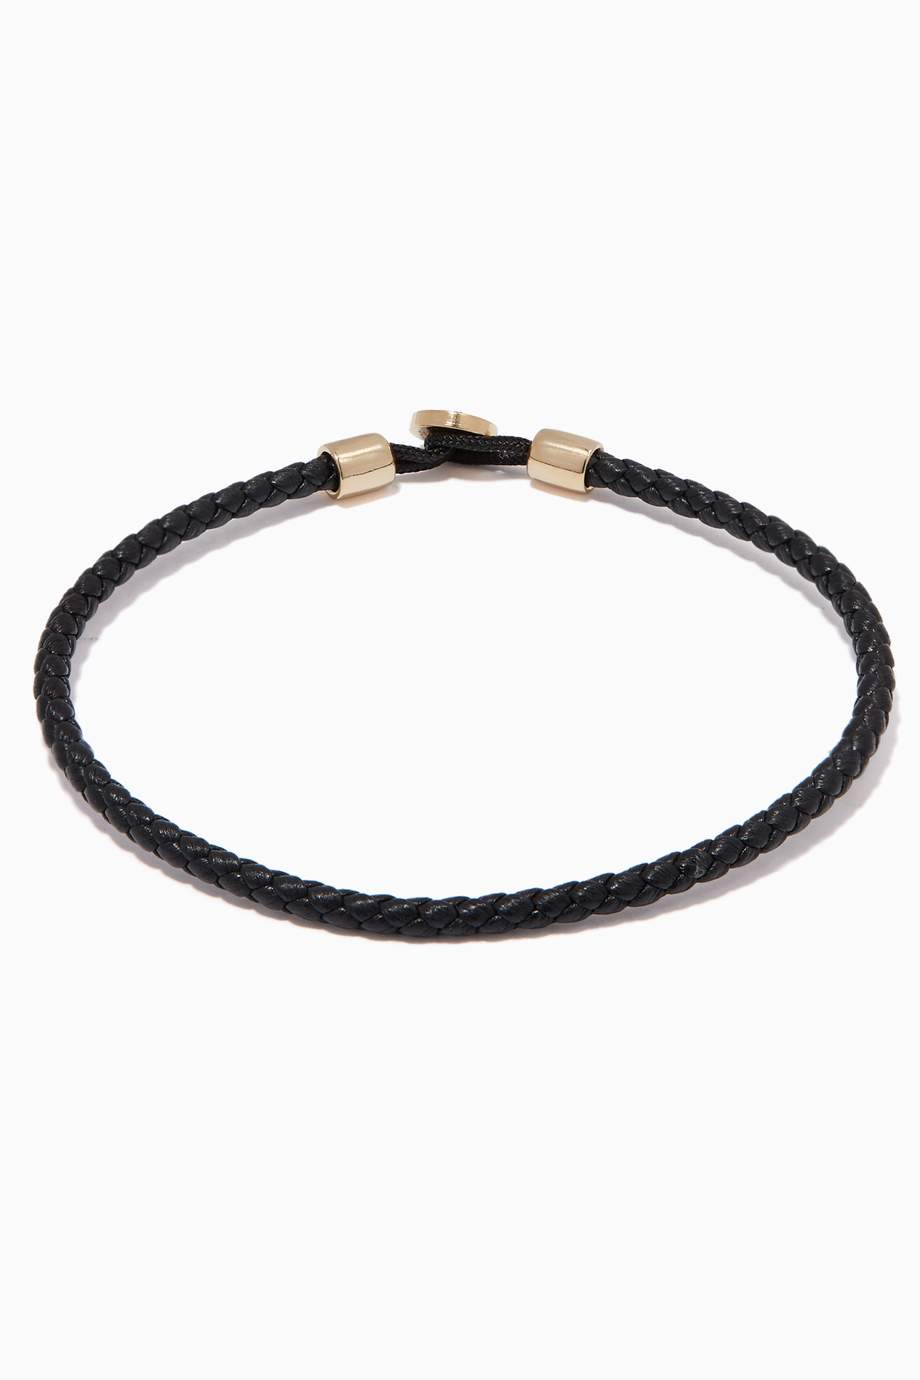 Shop Miansai Black Nexus Leather Bracelet for Men | Ounass UAE